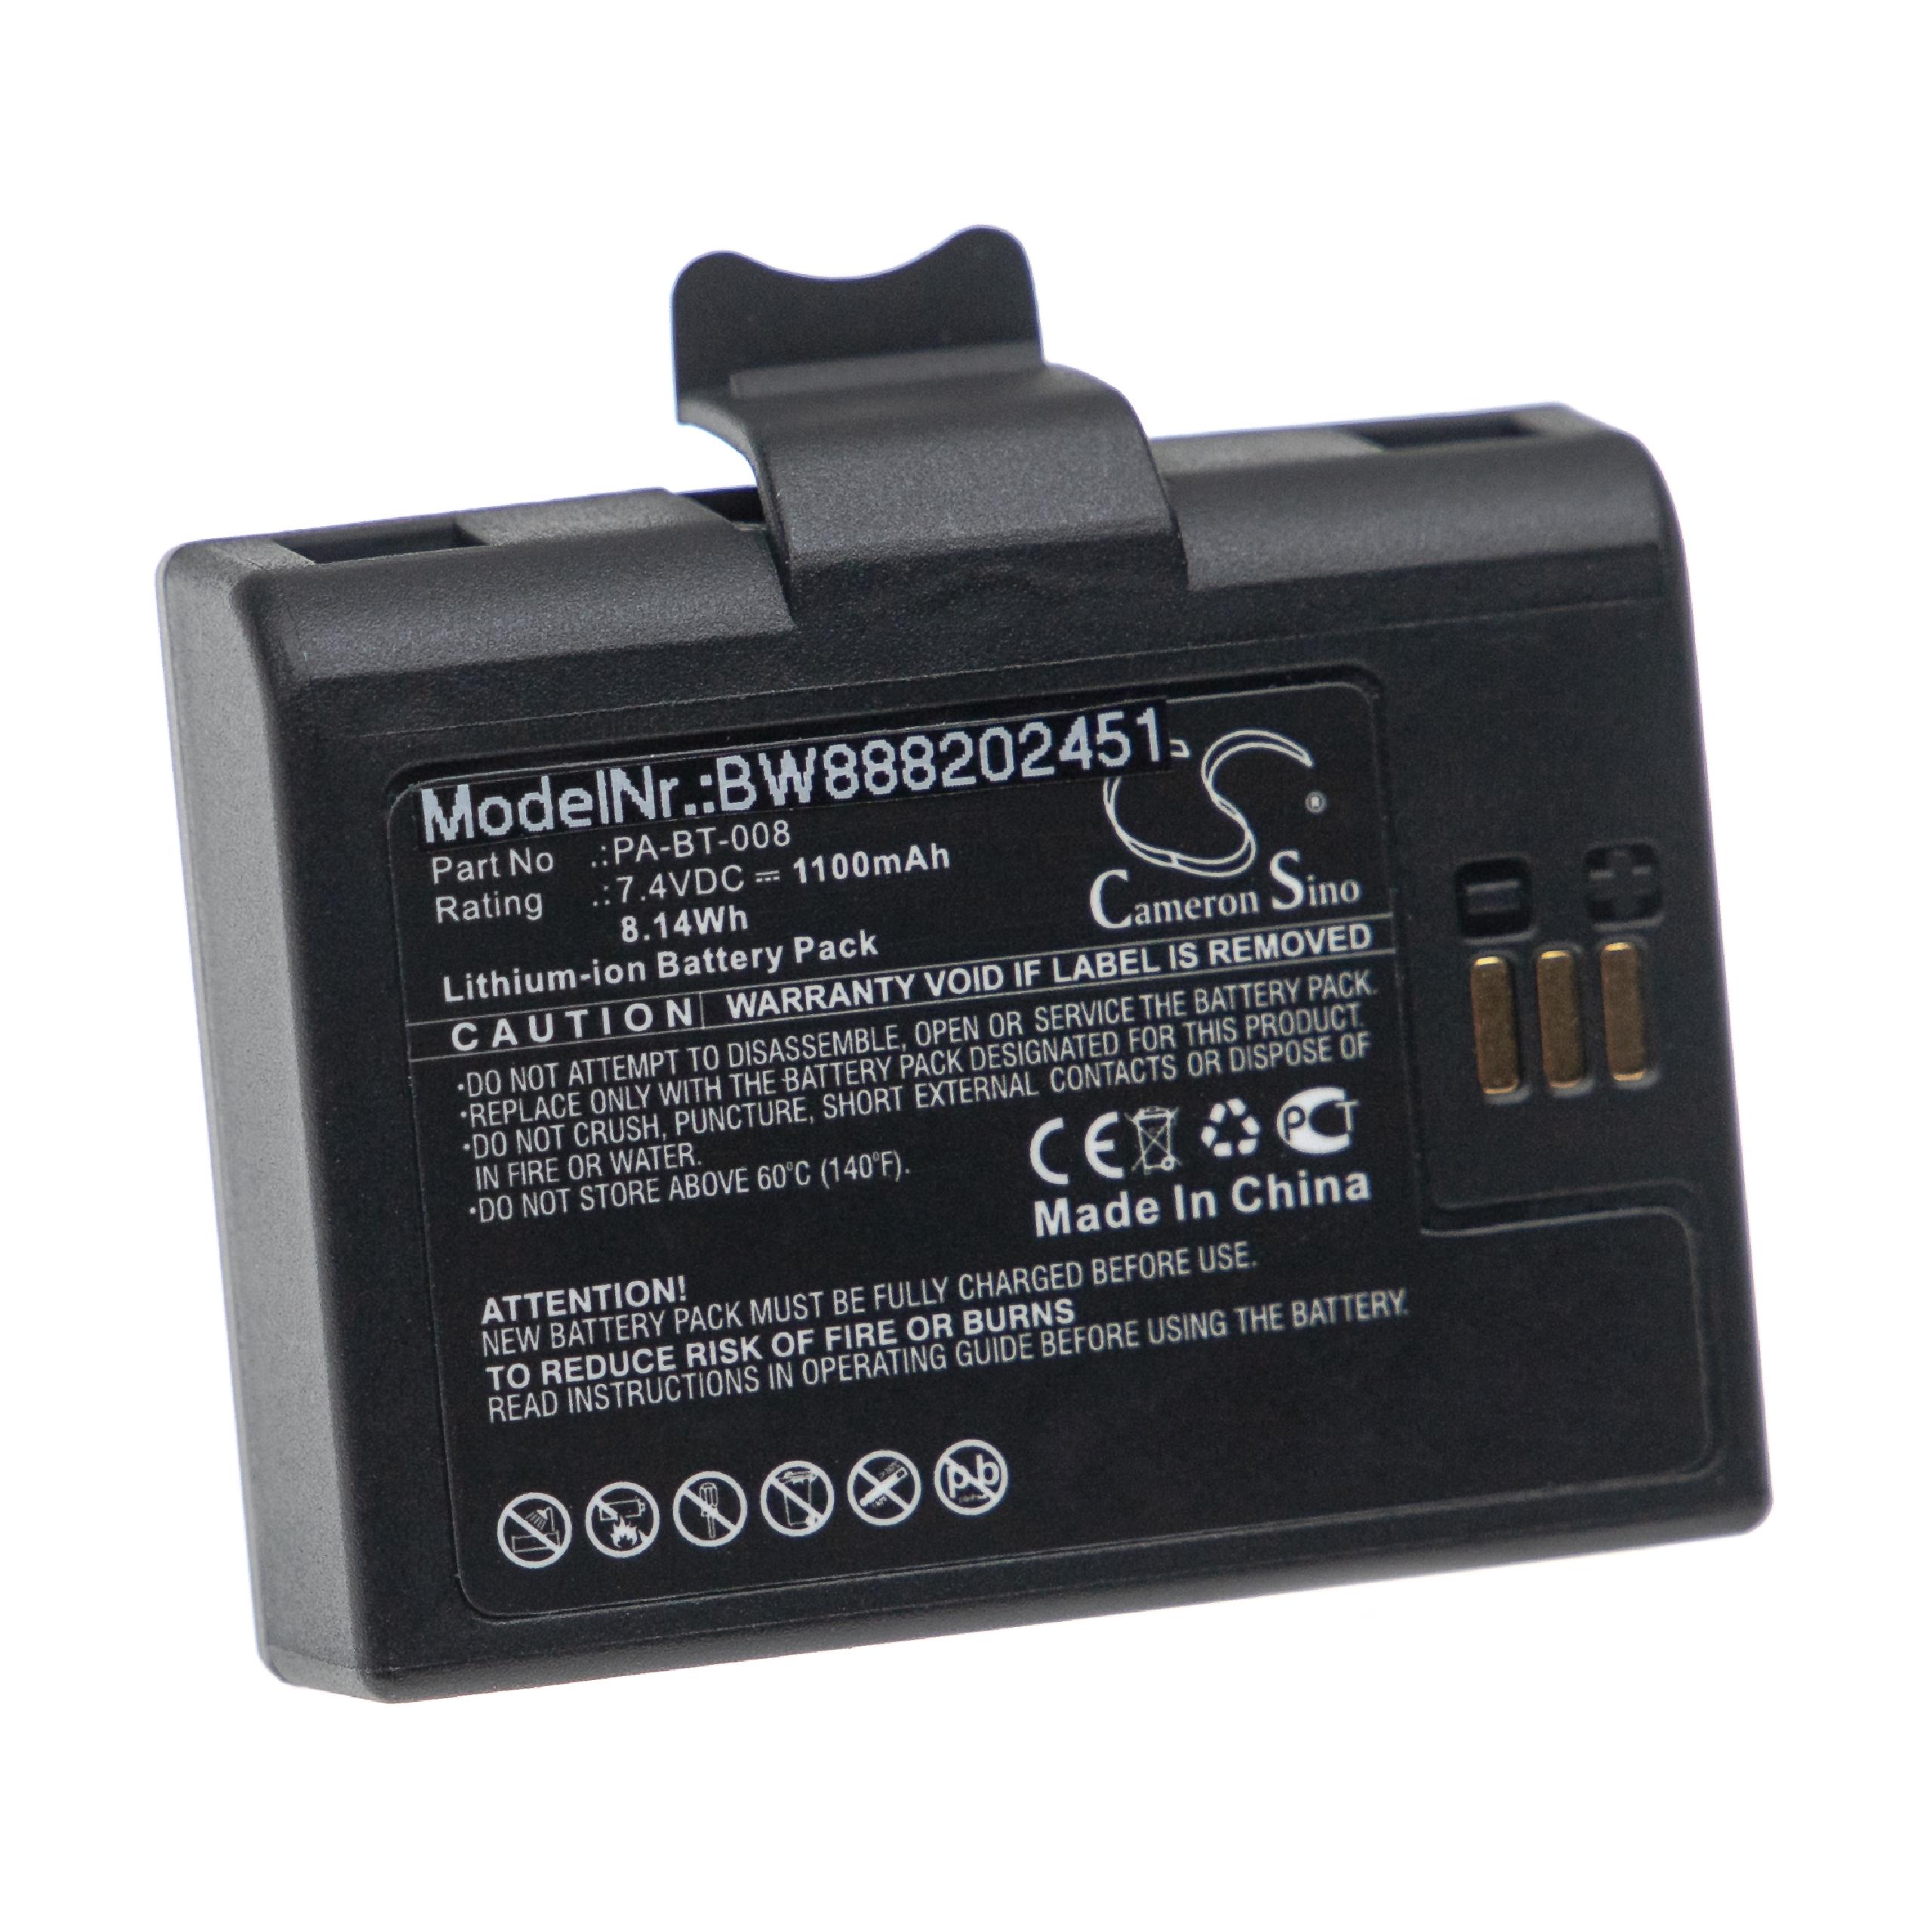 Akumulator do drukarki / drukarki etykiet zamiennik Brother PA-BT-008 - 1100 mAh 7,4 V Li-Ion